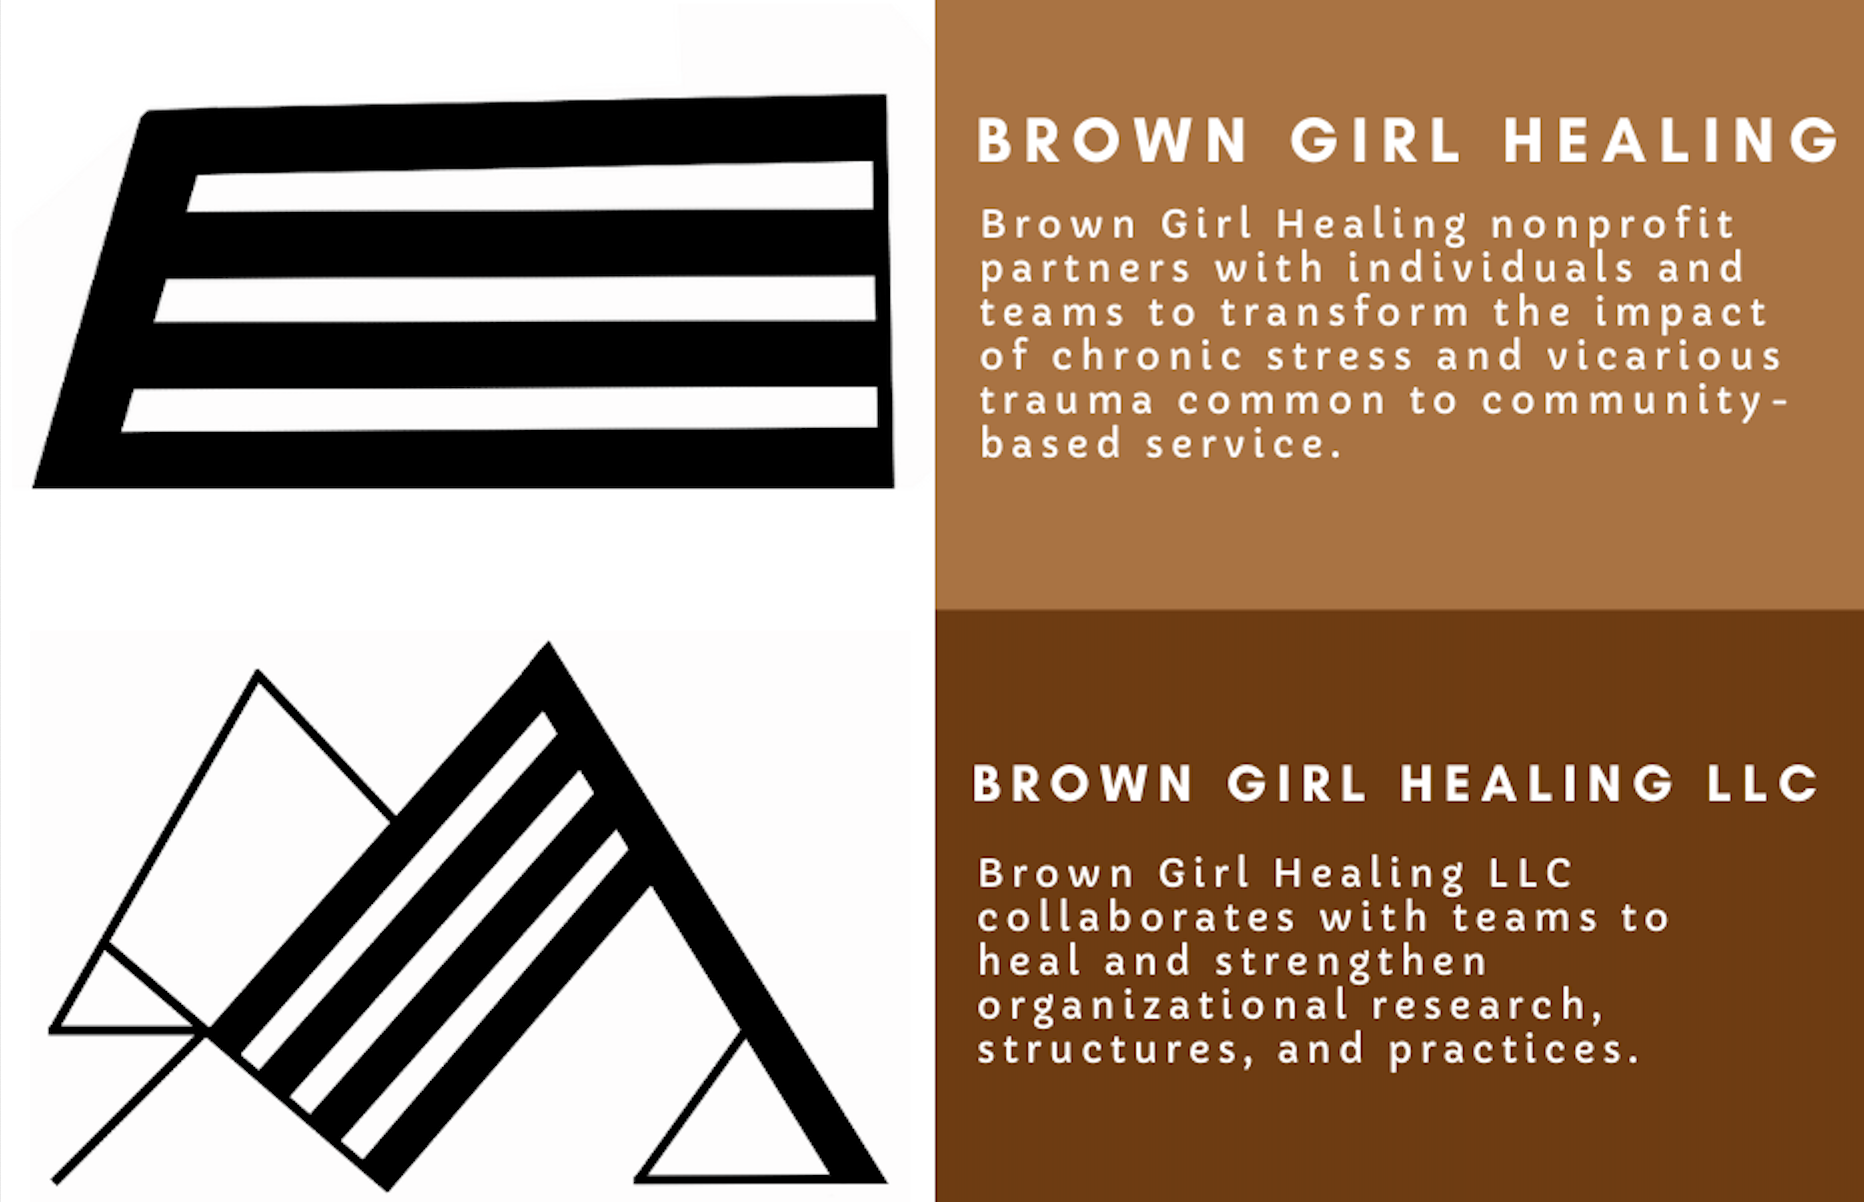 Brown Girl Healing Logo - Mountains in Black and white .